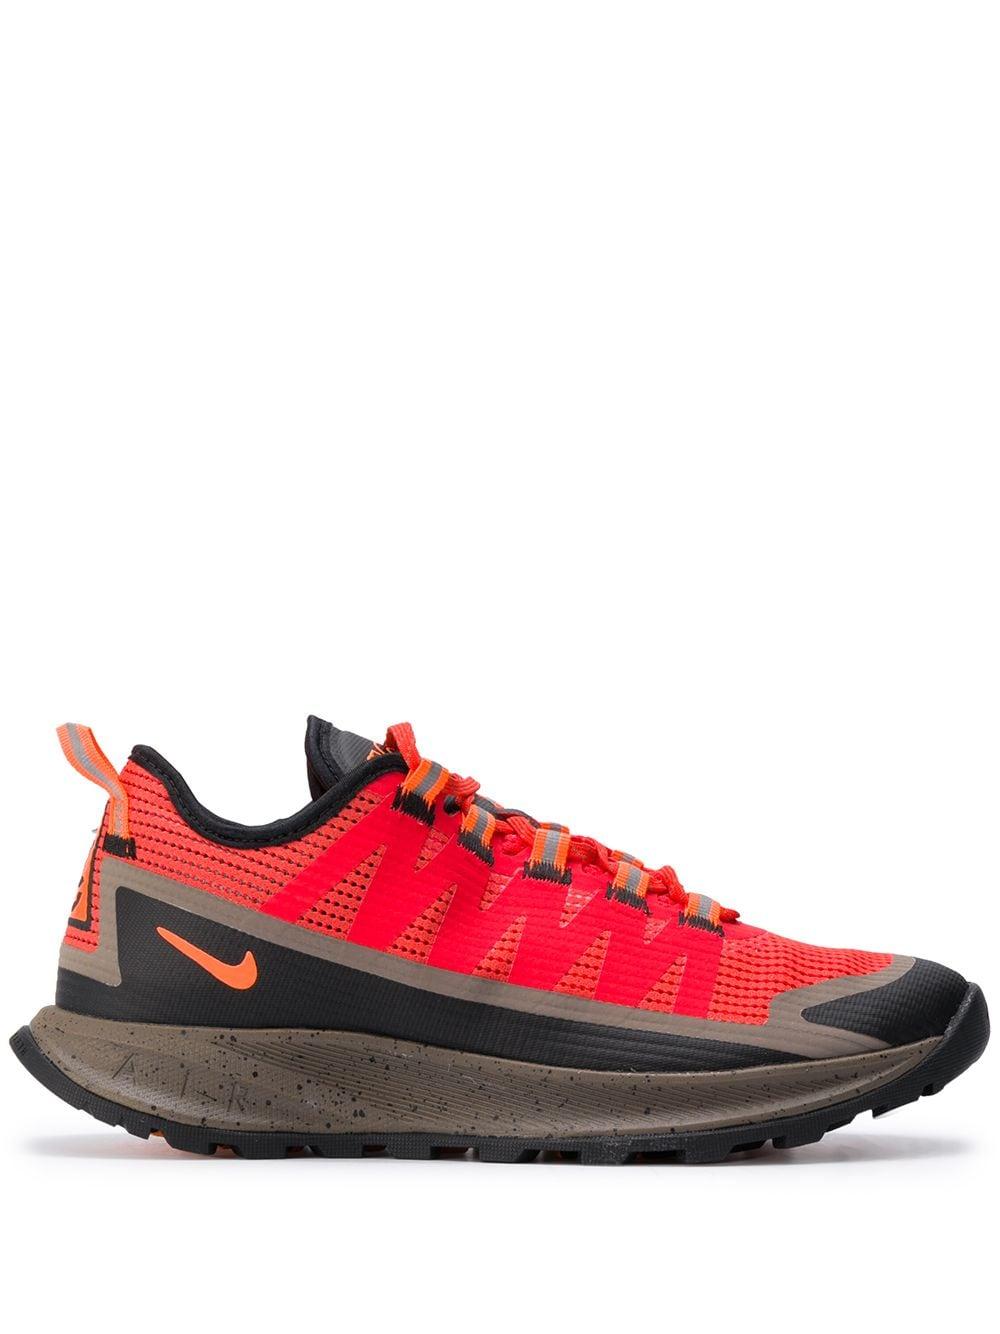 Nike Acg Air Nasu in Orange/Orange (Red) for Men - Lyst